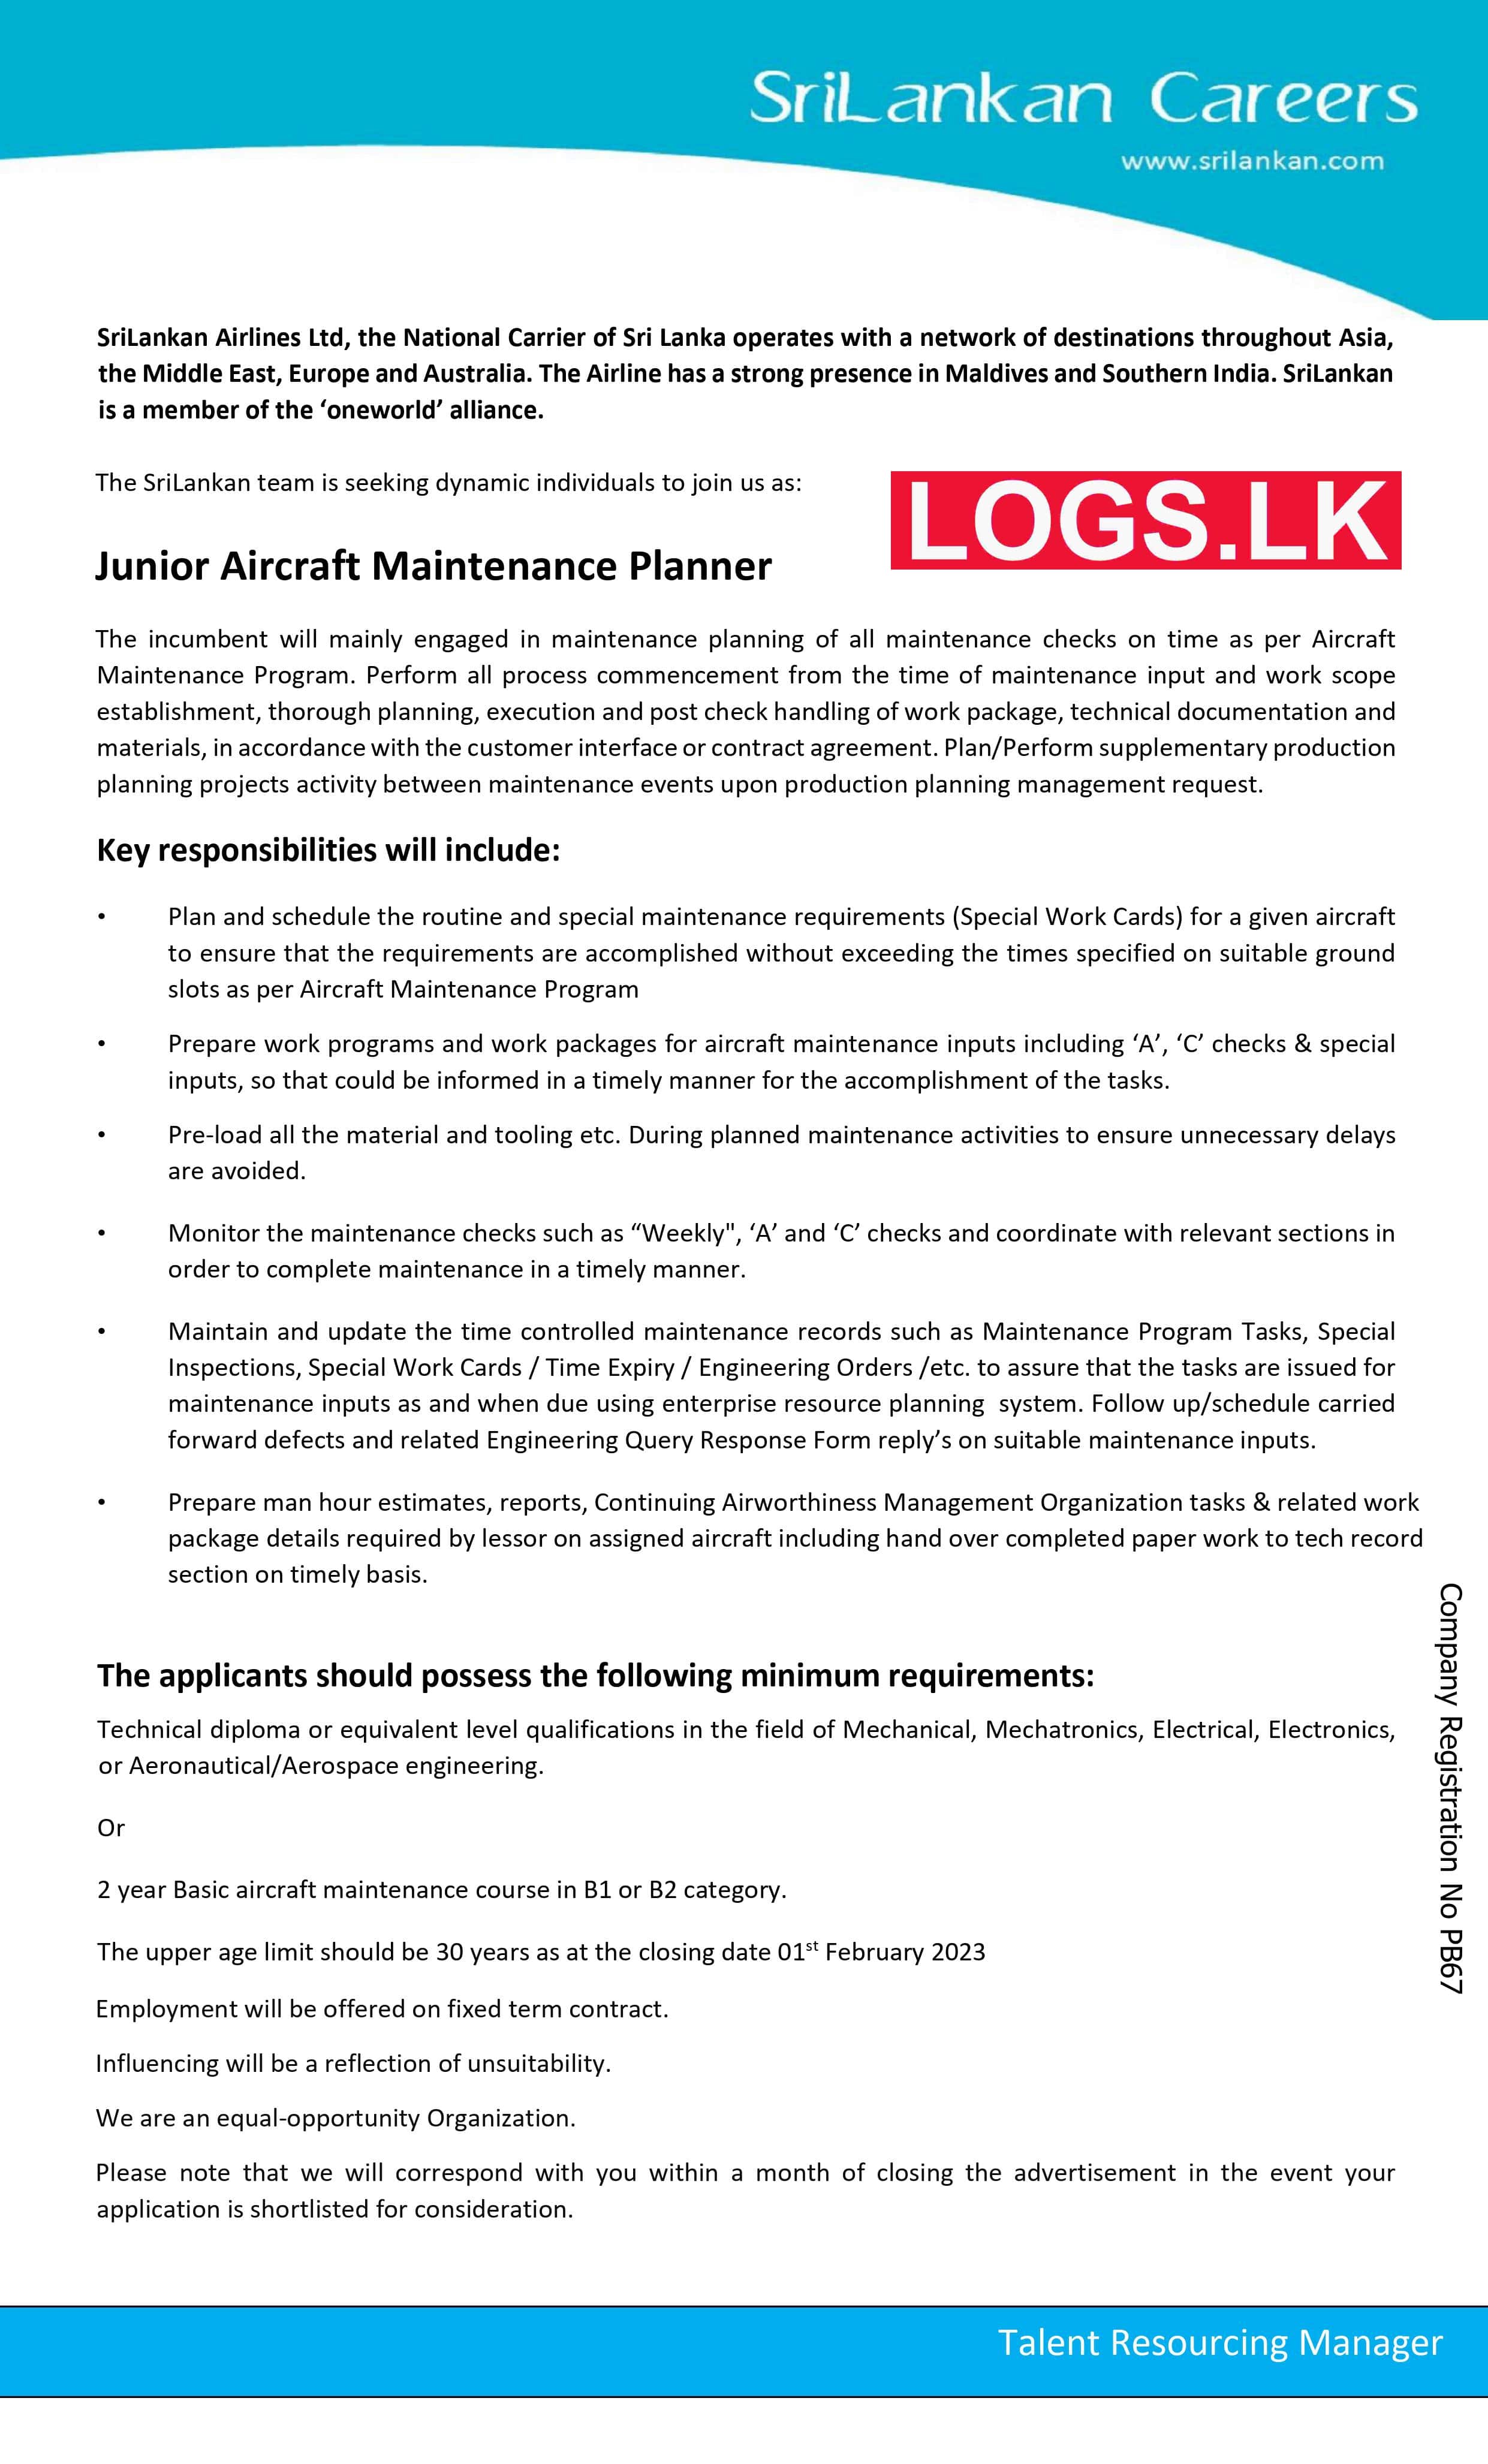 Junior Aircraft Maintenance Planner - Sri Lankan Airlines Vacancies Application Form, Apply Online Details